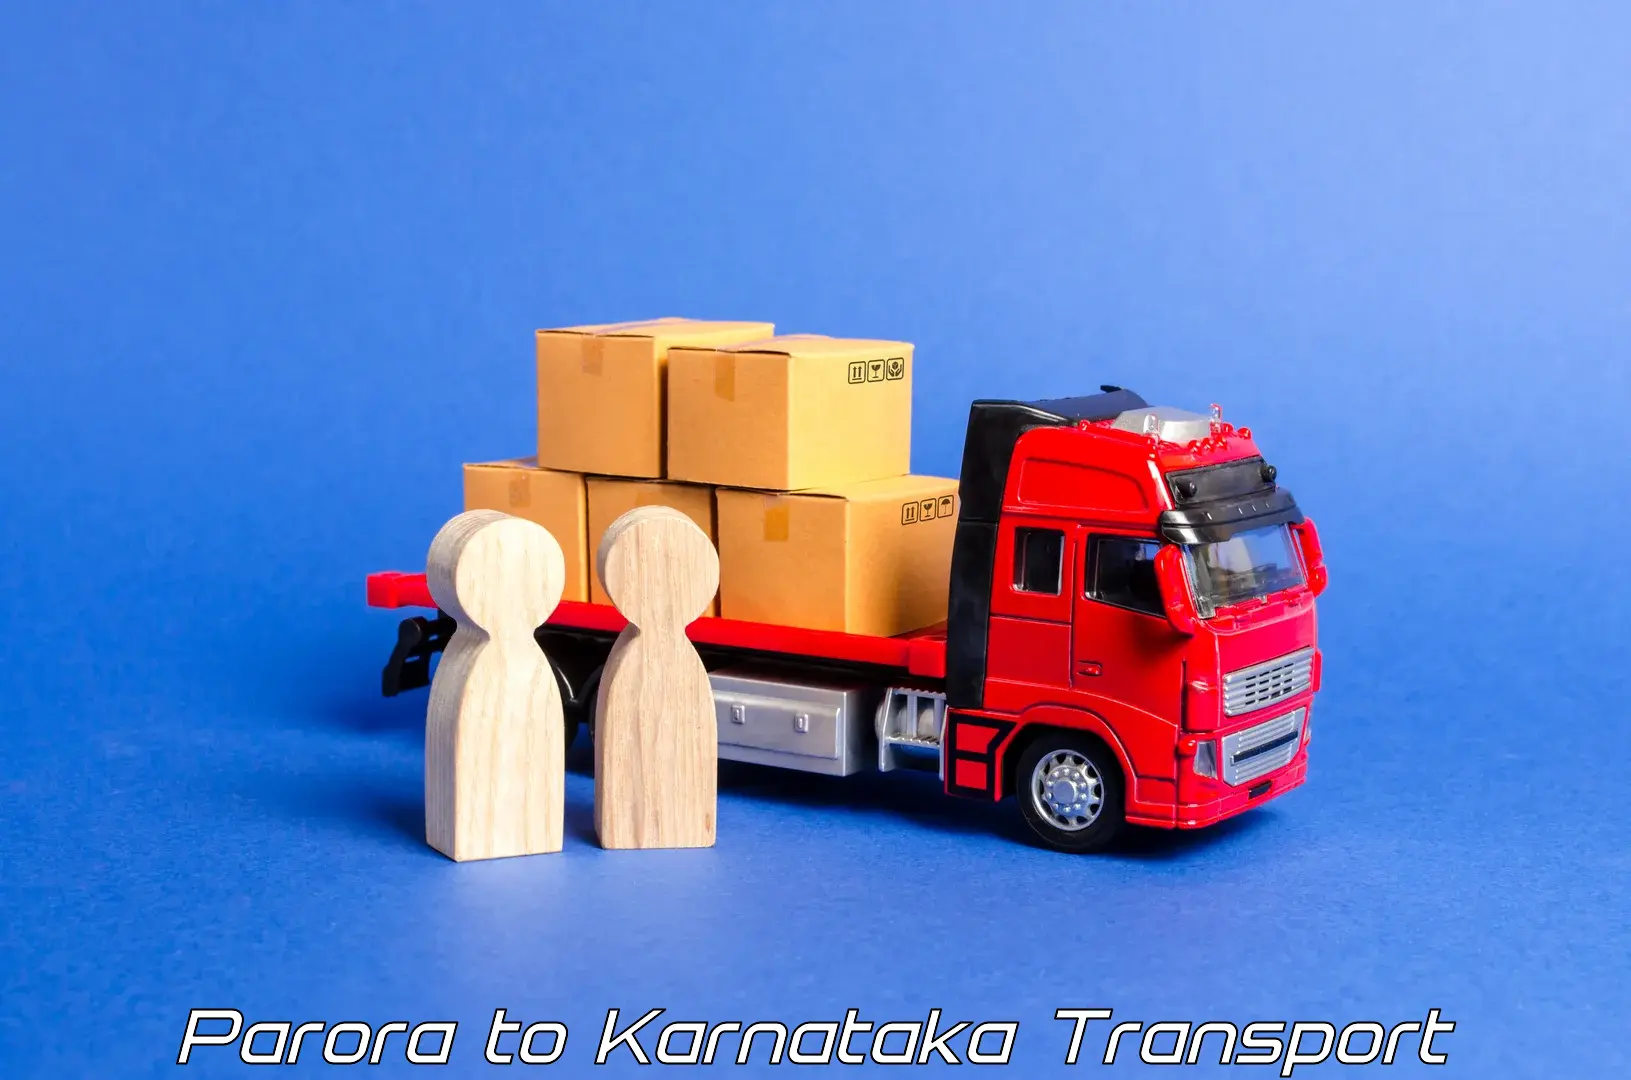 Vehicle parcel service Parora to Karnataka